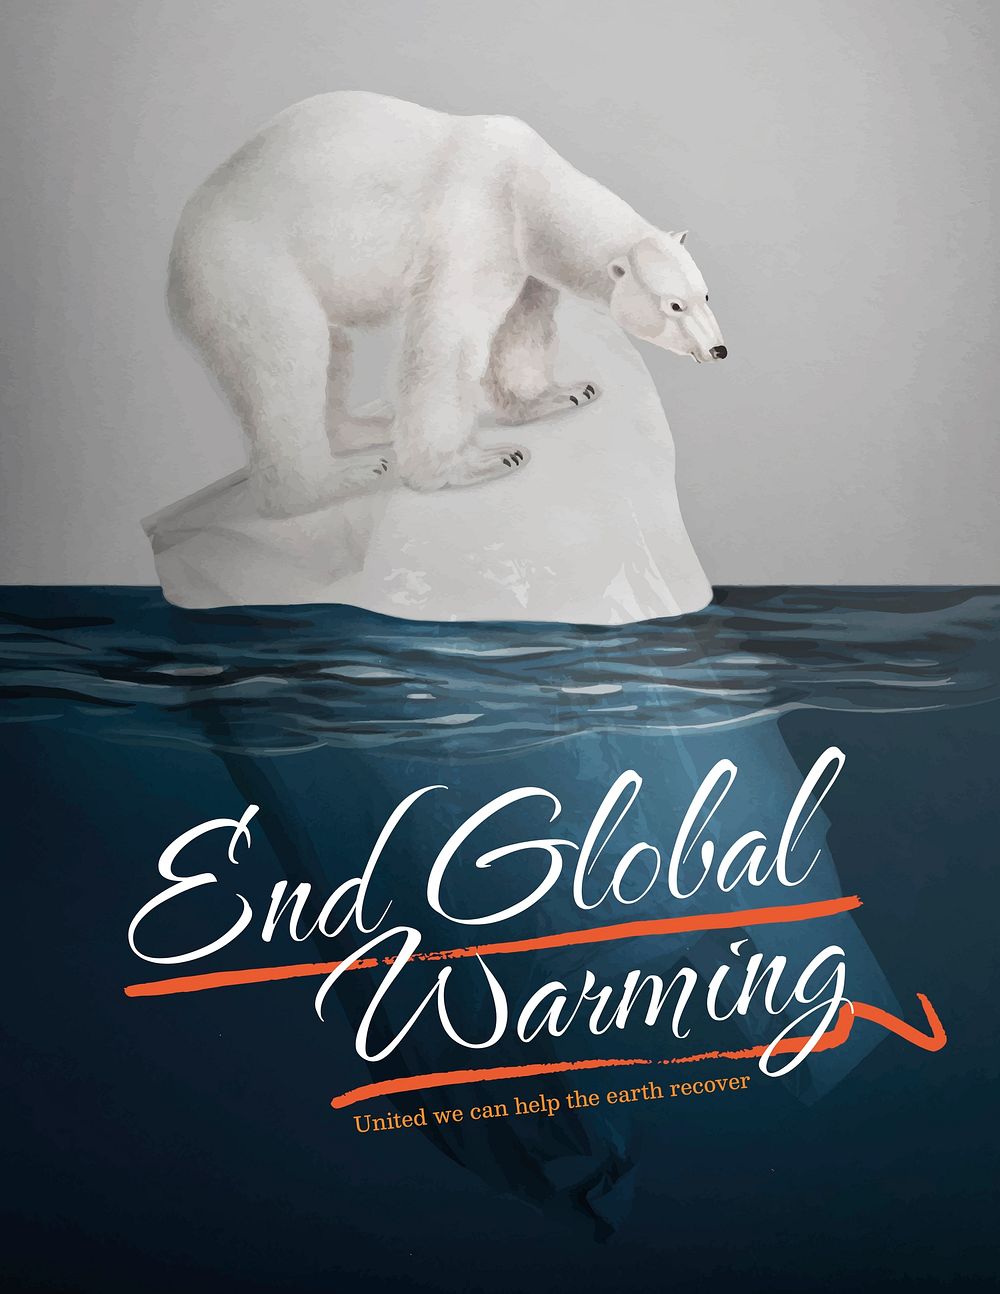 Global warming  flyer template, editable text vector